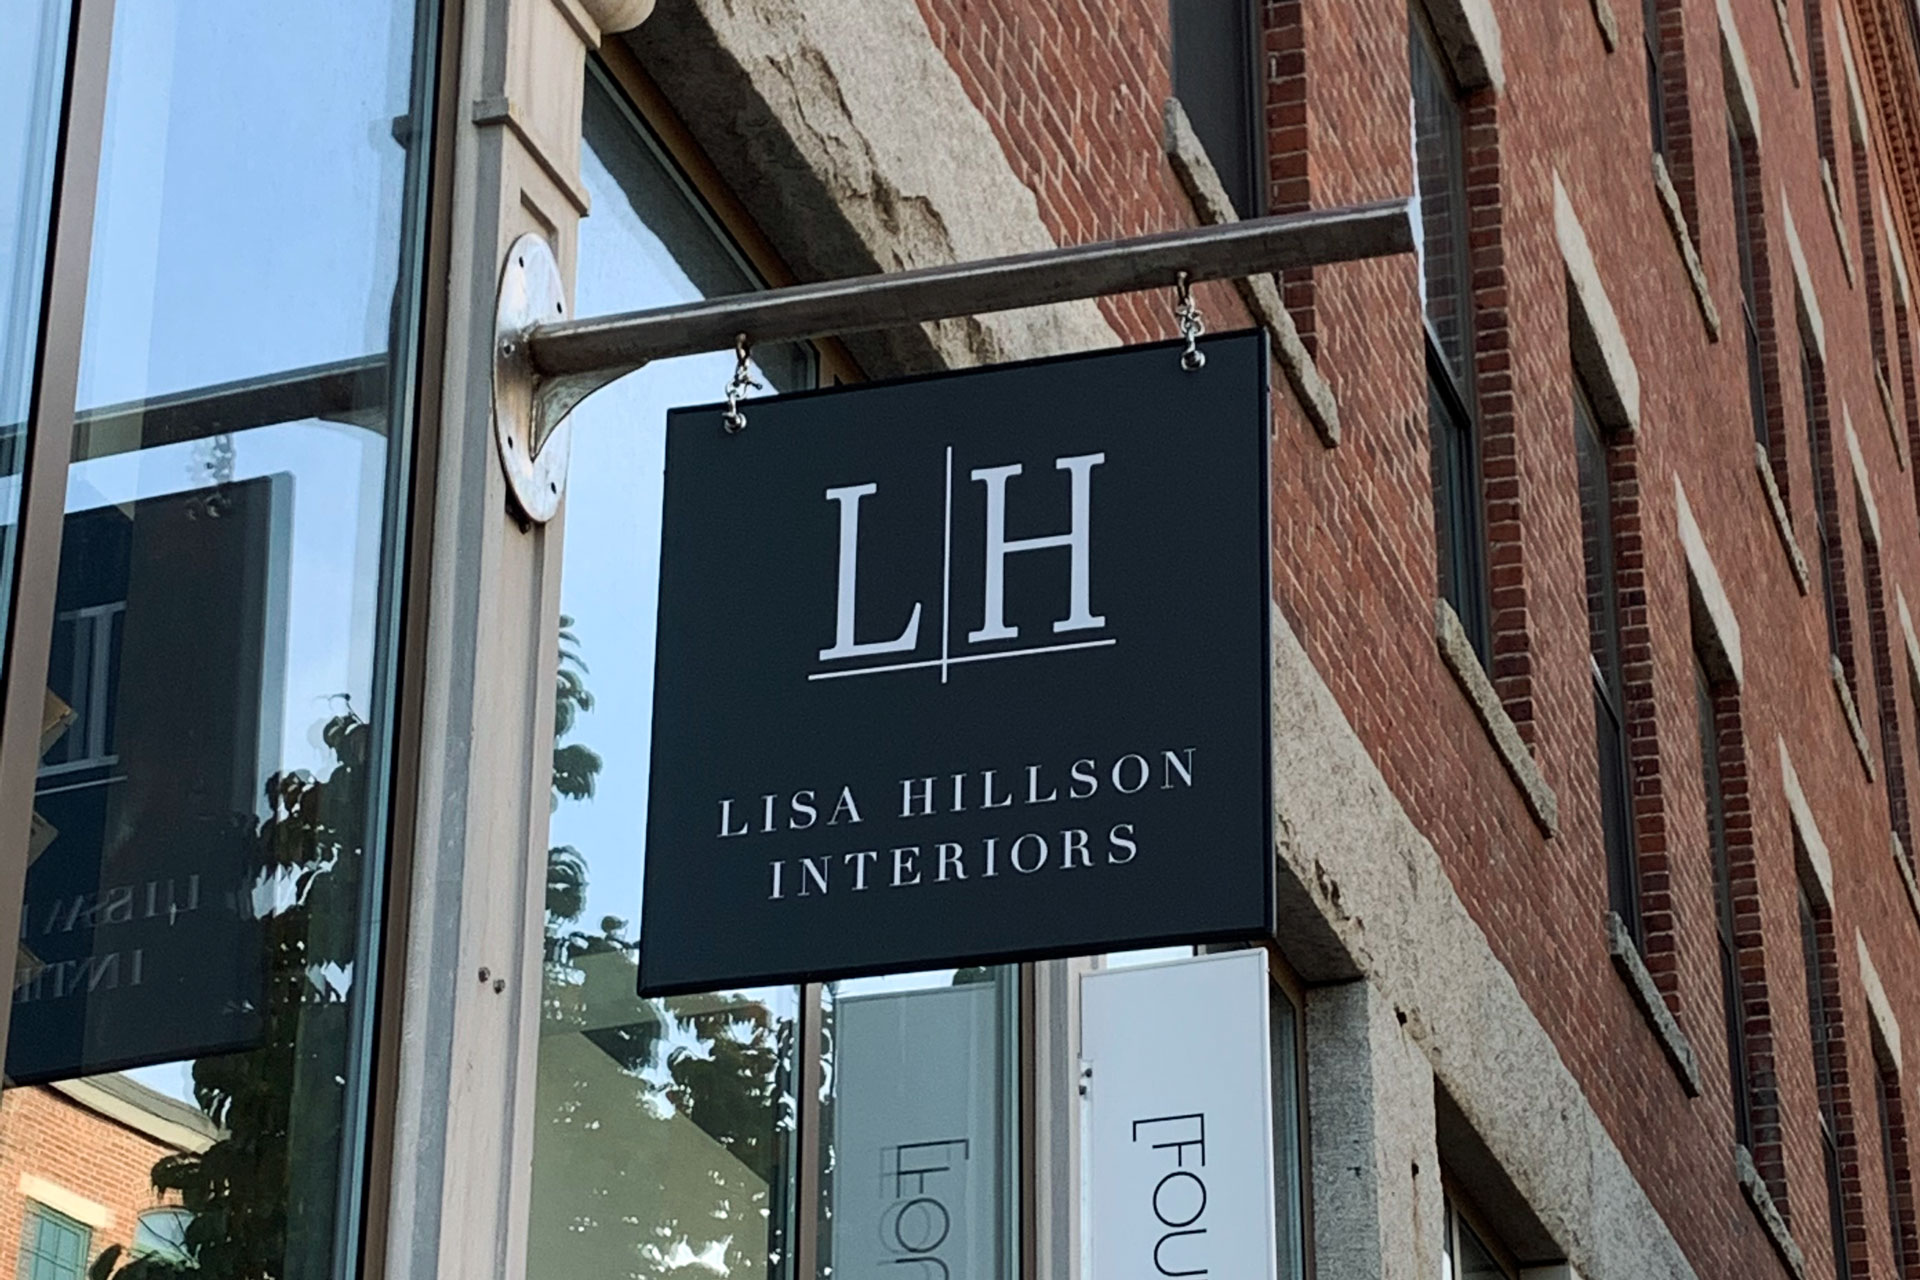 Lisa Hillson Interiors - Signage